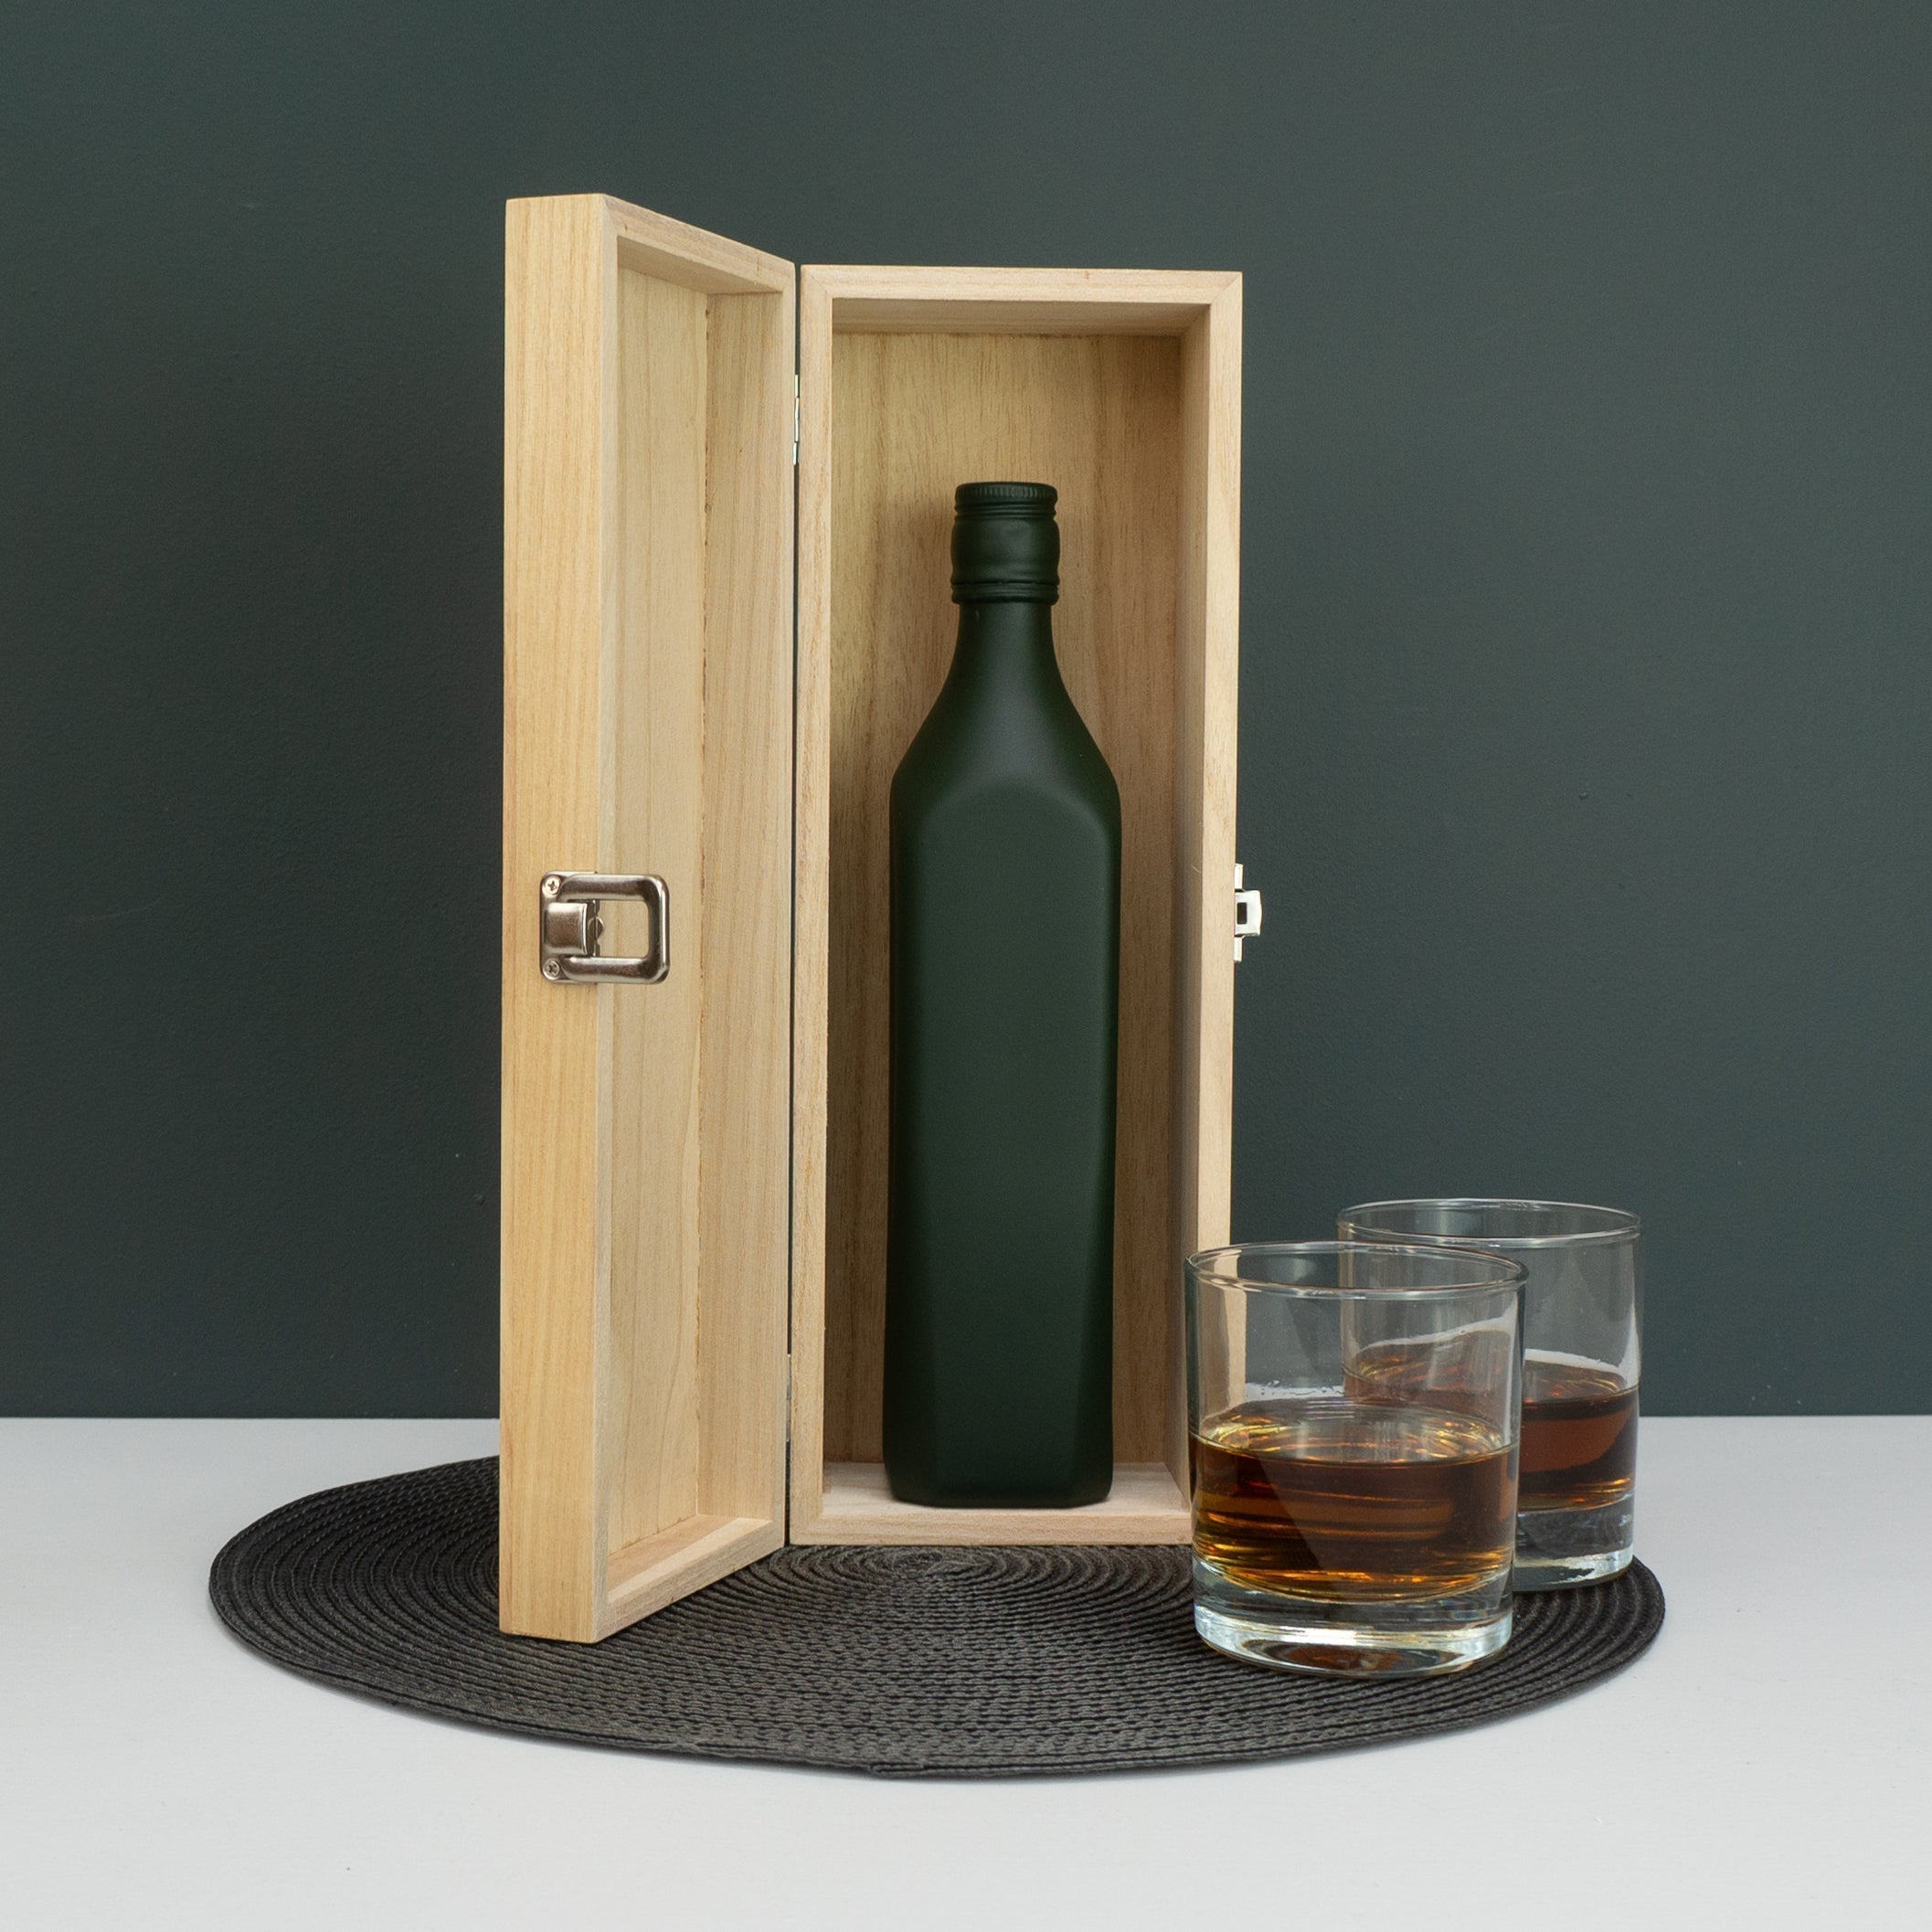 Personalised retirement present. Custom engraved wooden wine bottle box